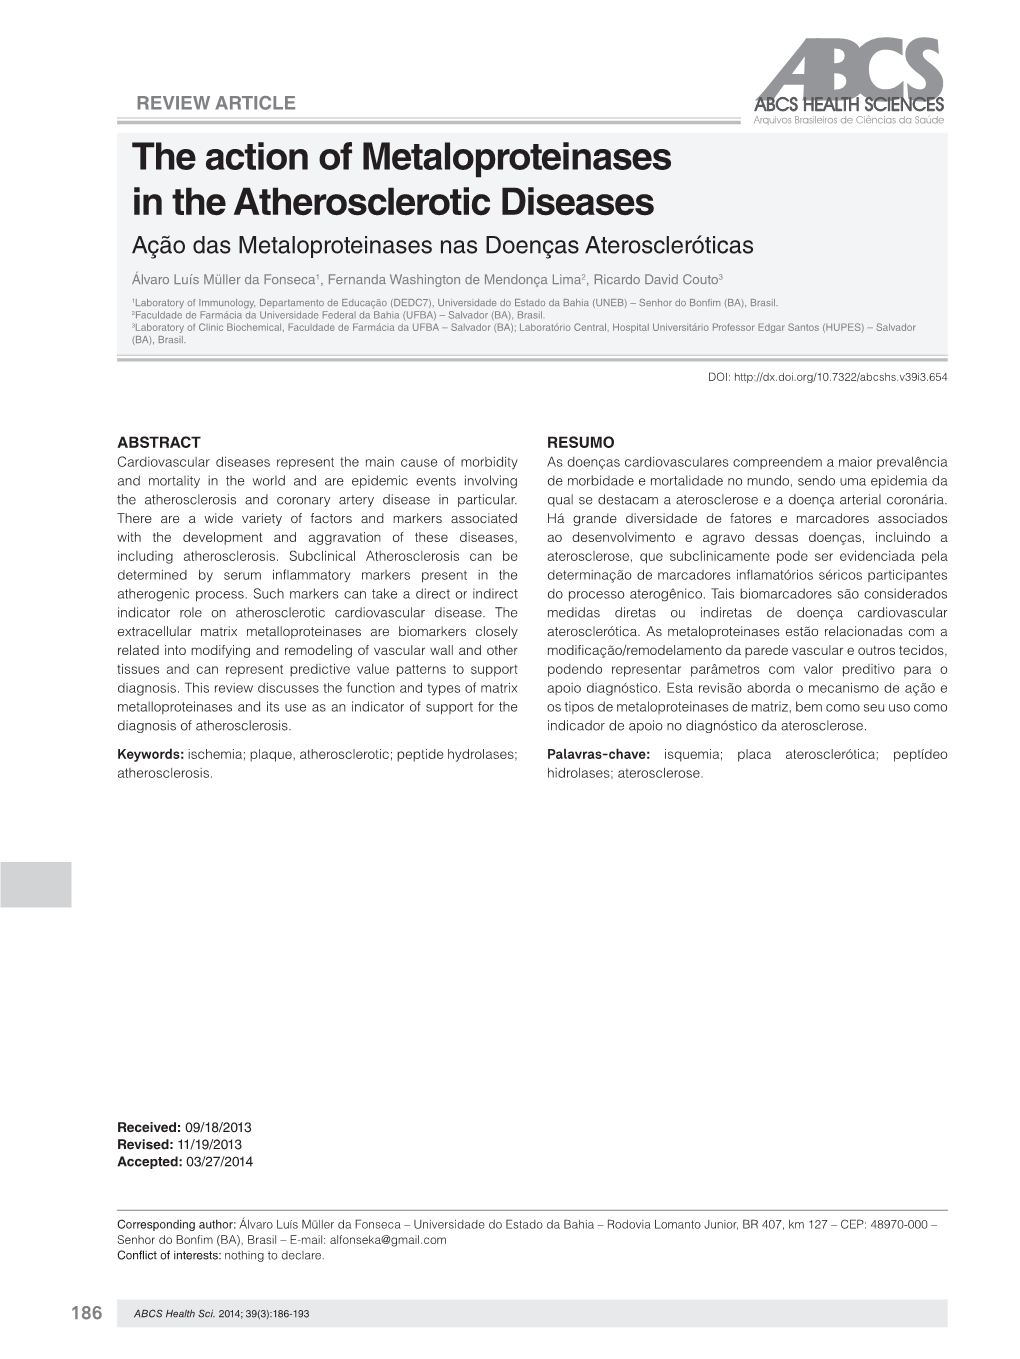 The Action of Metaloproteinases in the Atherosclerotic Diseases Ação Das Metaloproteinases Nas Doenças Ateroscleróticas